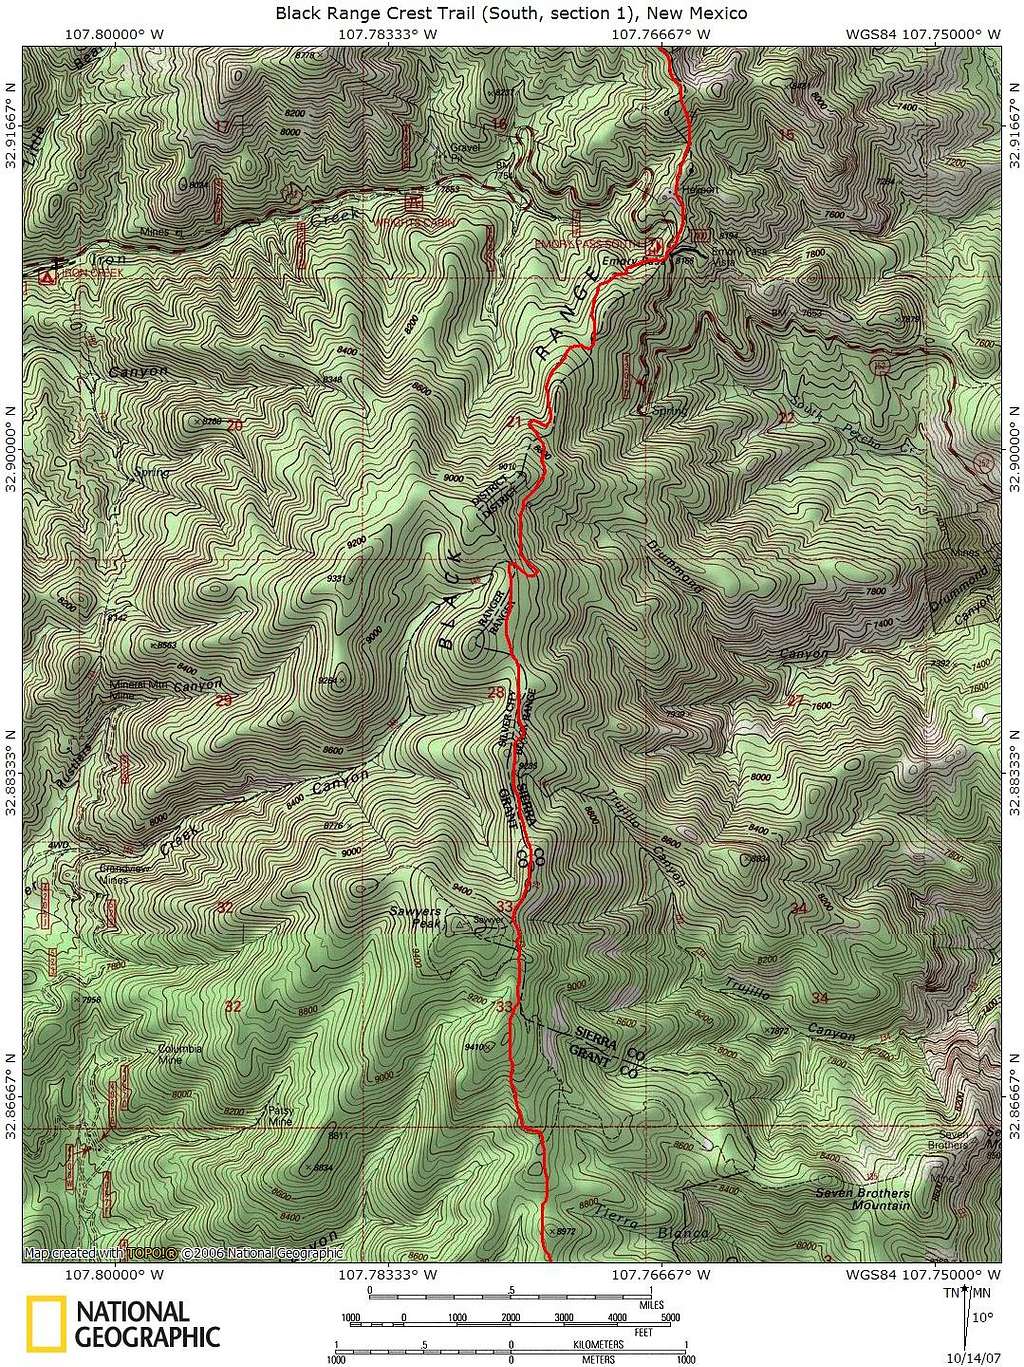 Black Range Crest Trail (South, section 1)